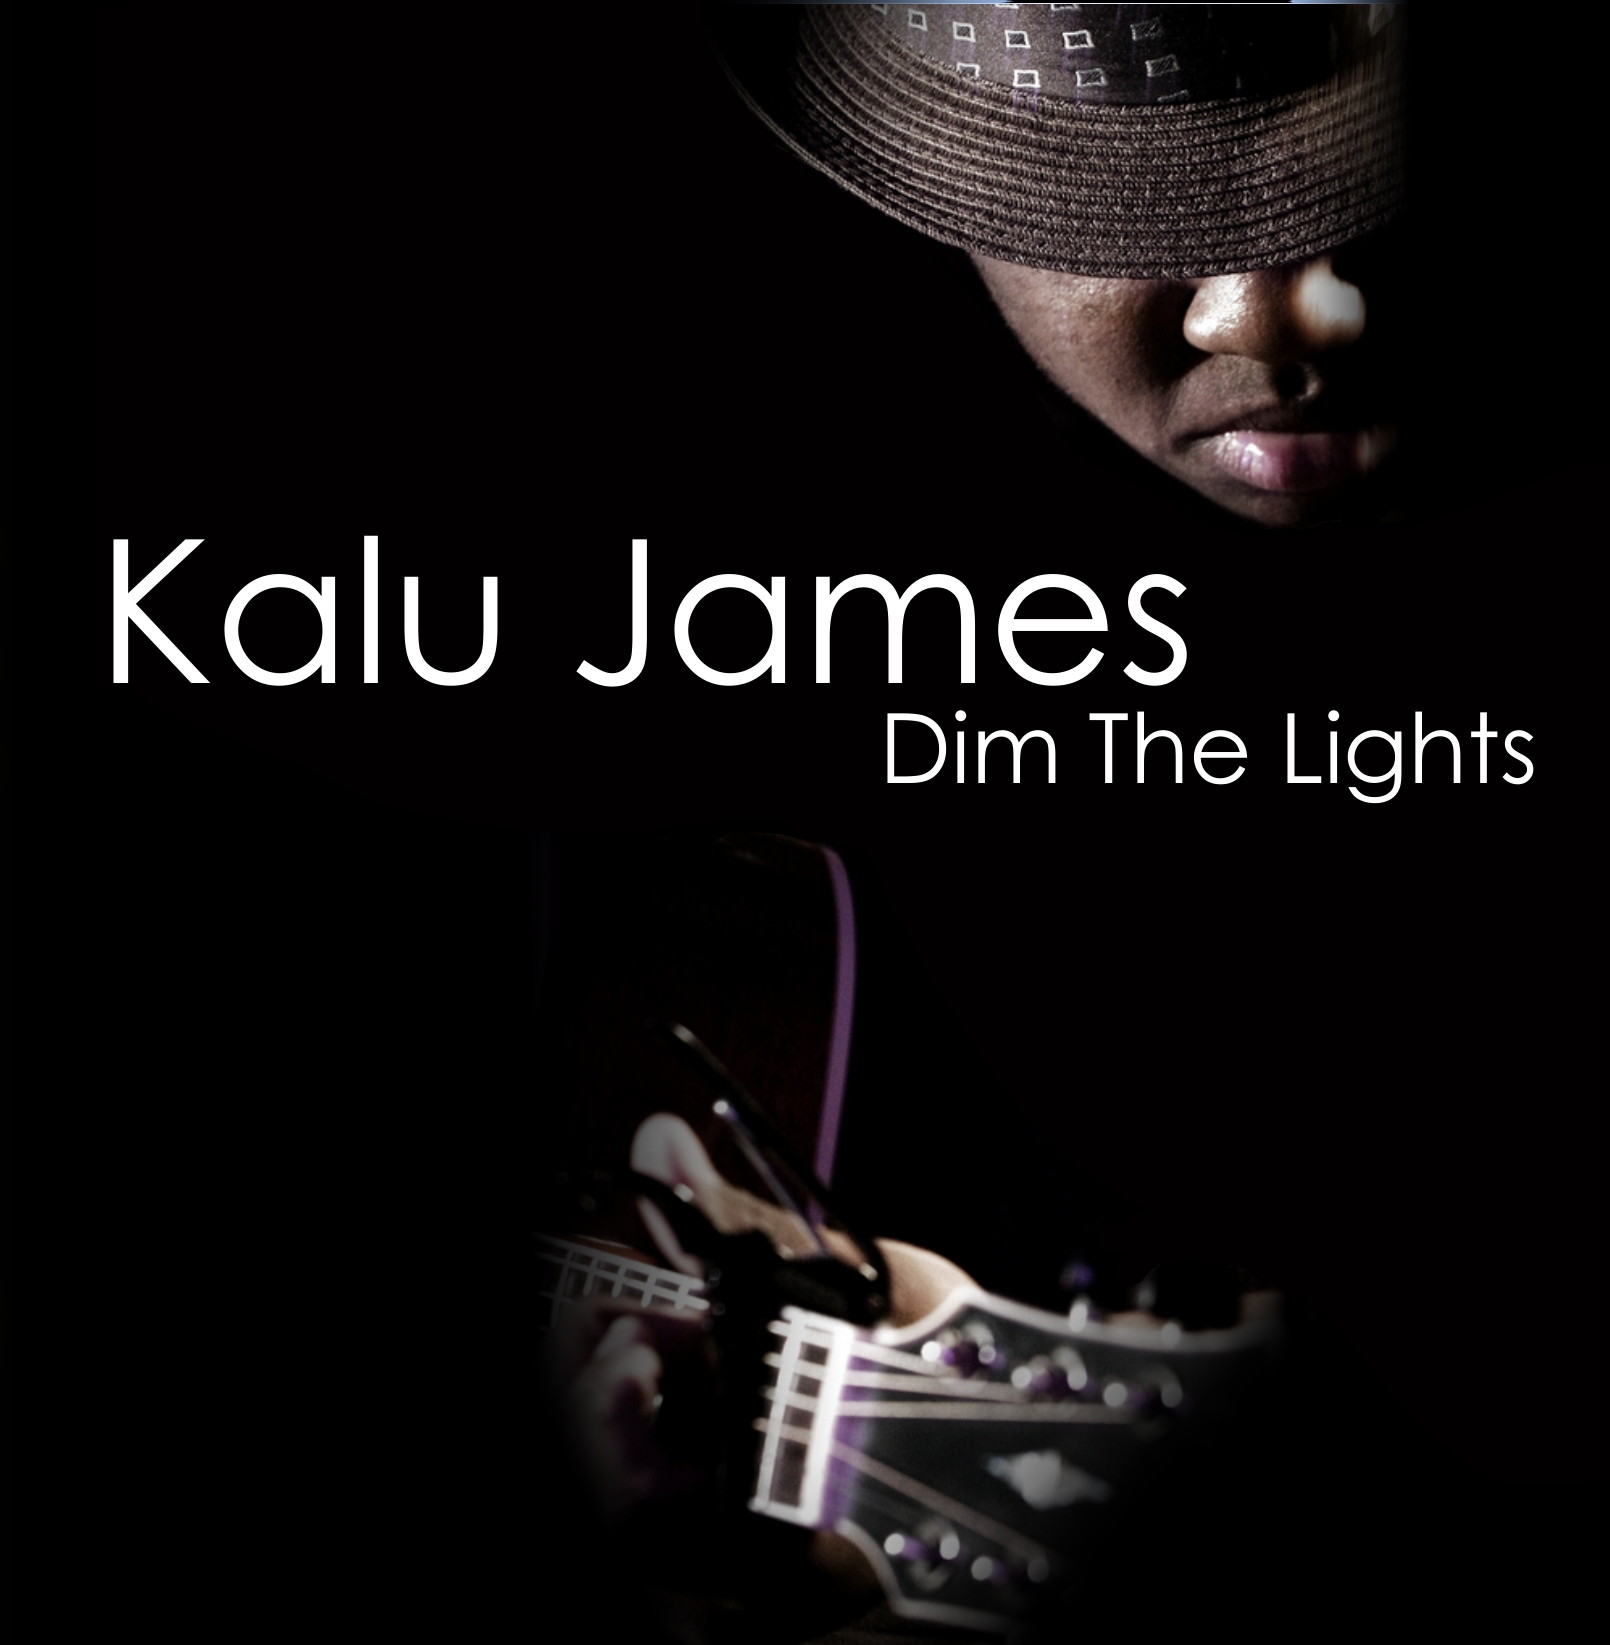 http://indiemusicpeople.com/uploads2/Kalu_James_-_coverart.JPG